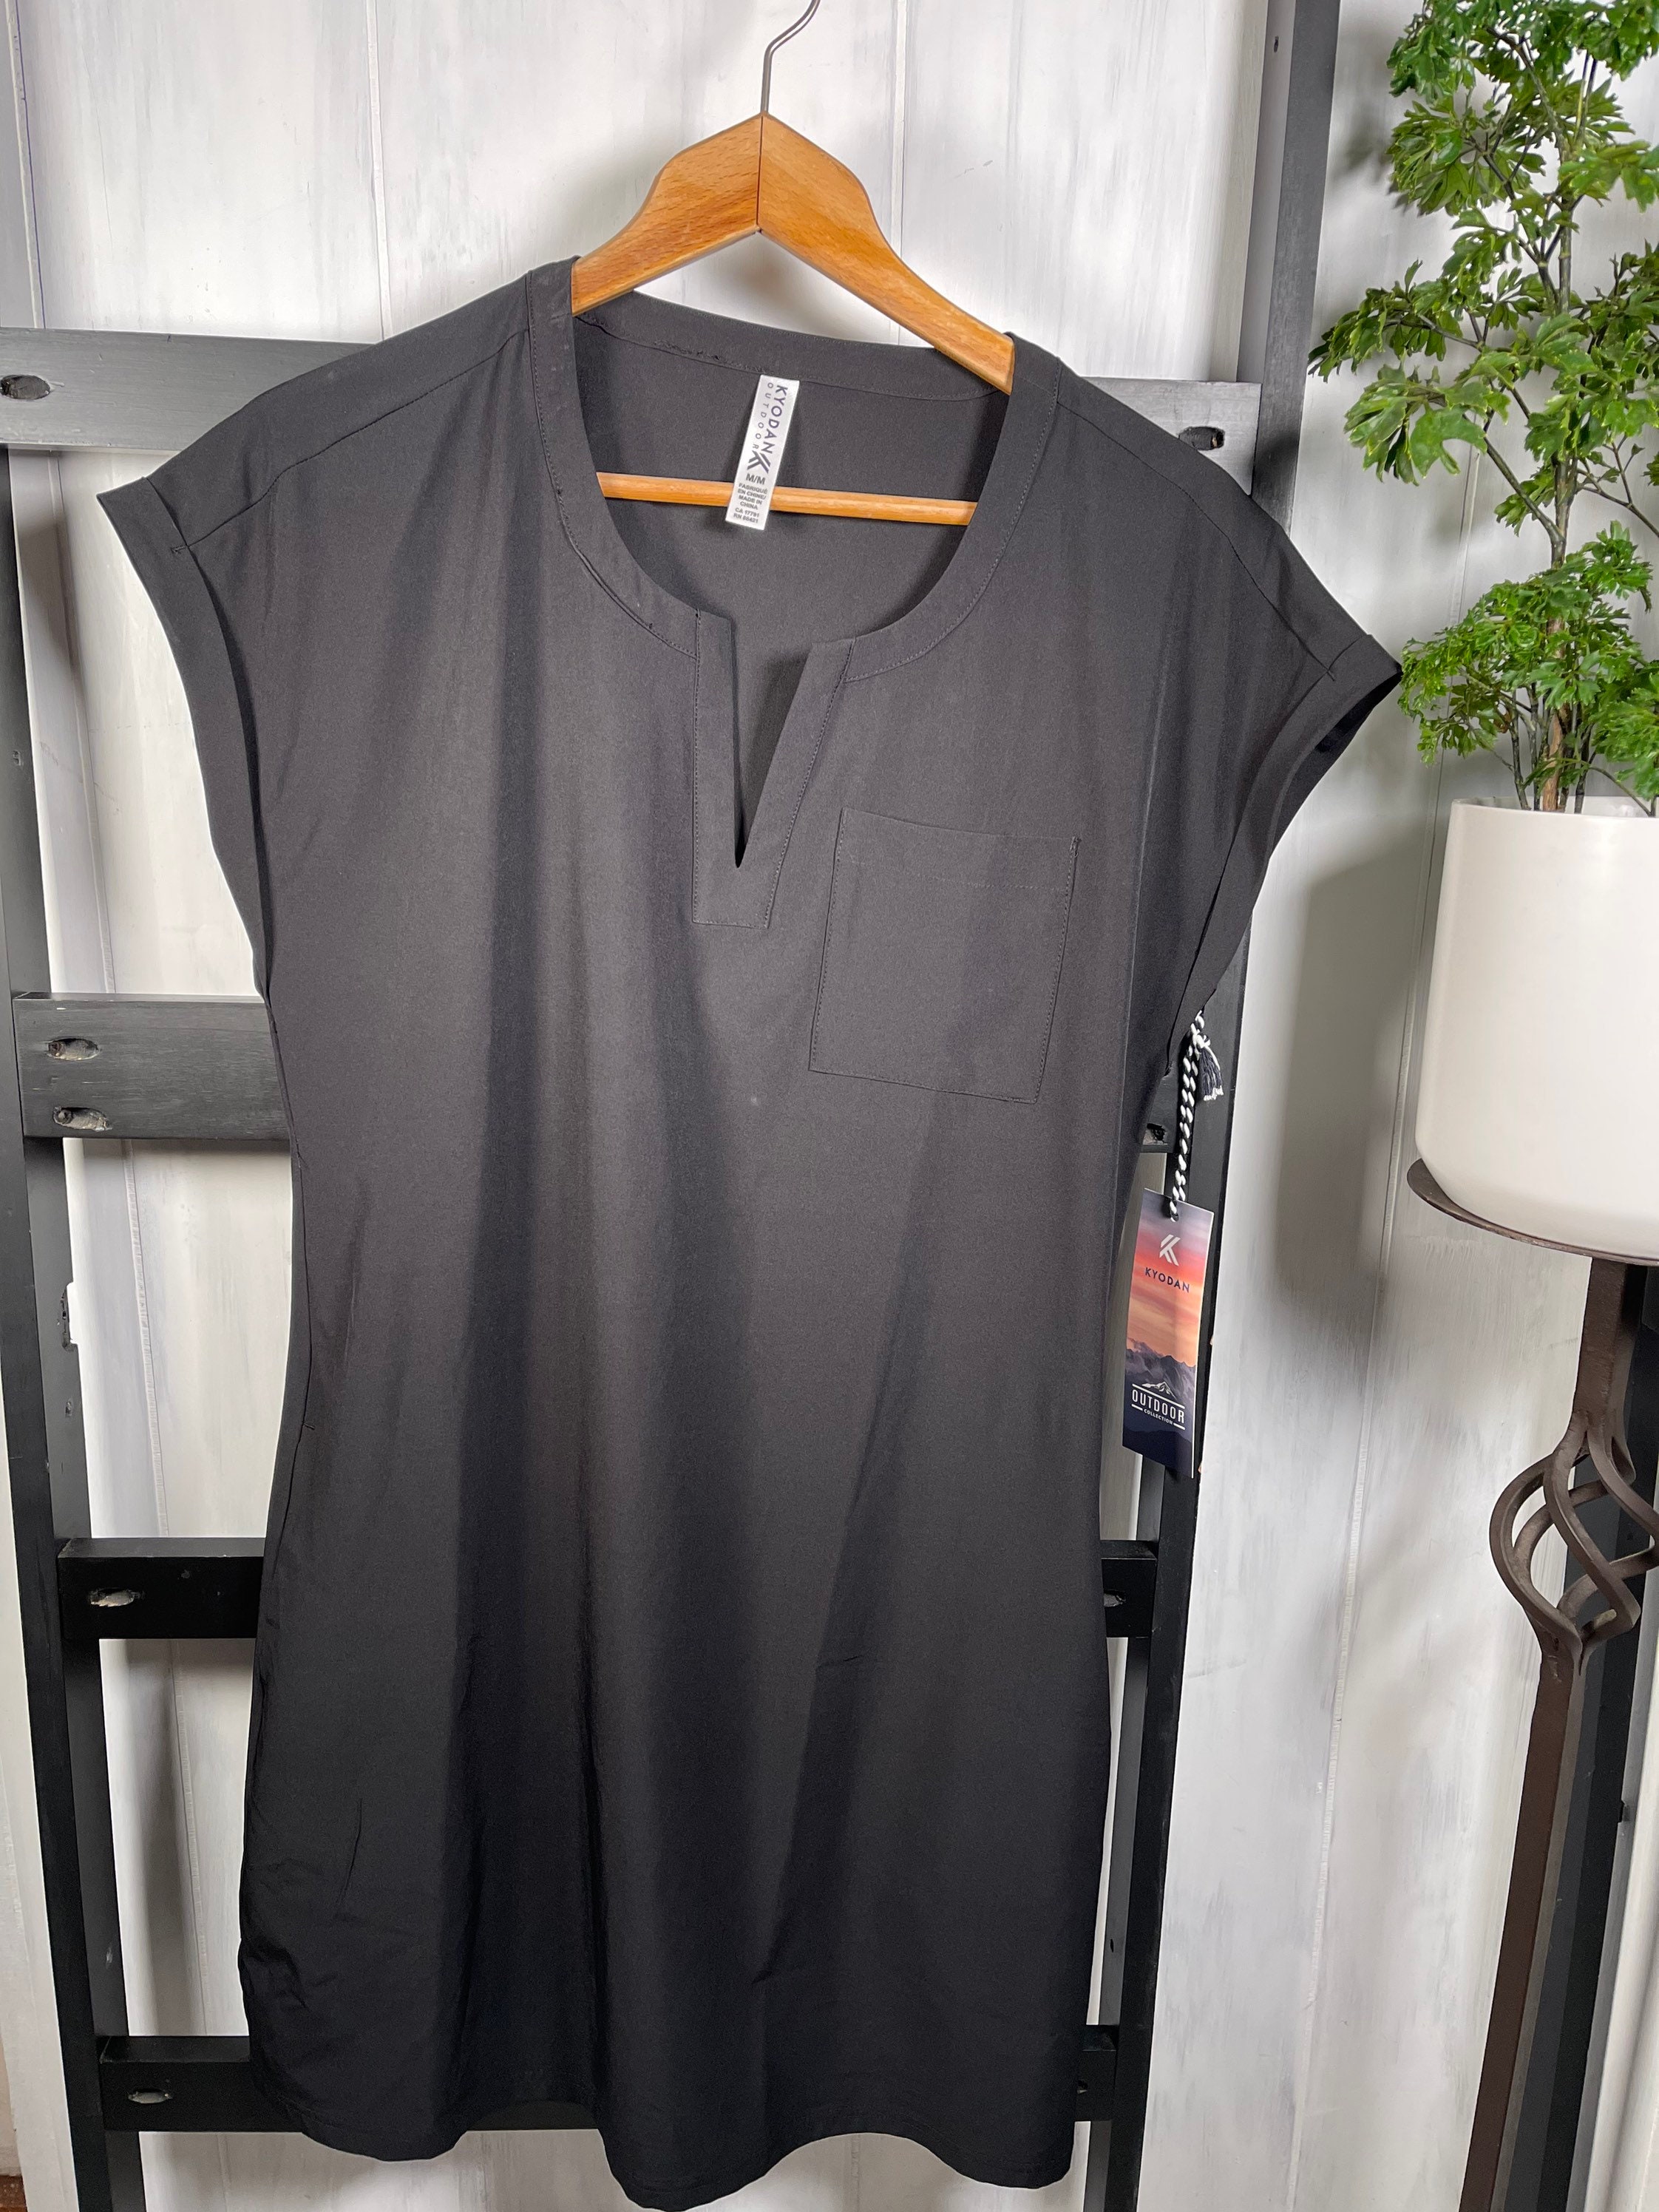 Kyodan Black Dress With Pockets, Size Medium, Quick Dry Fabric